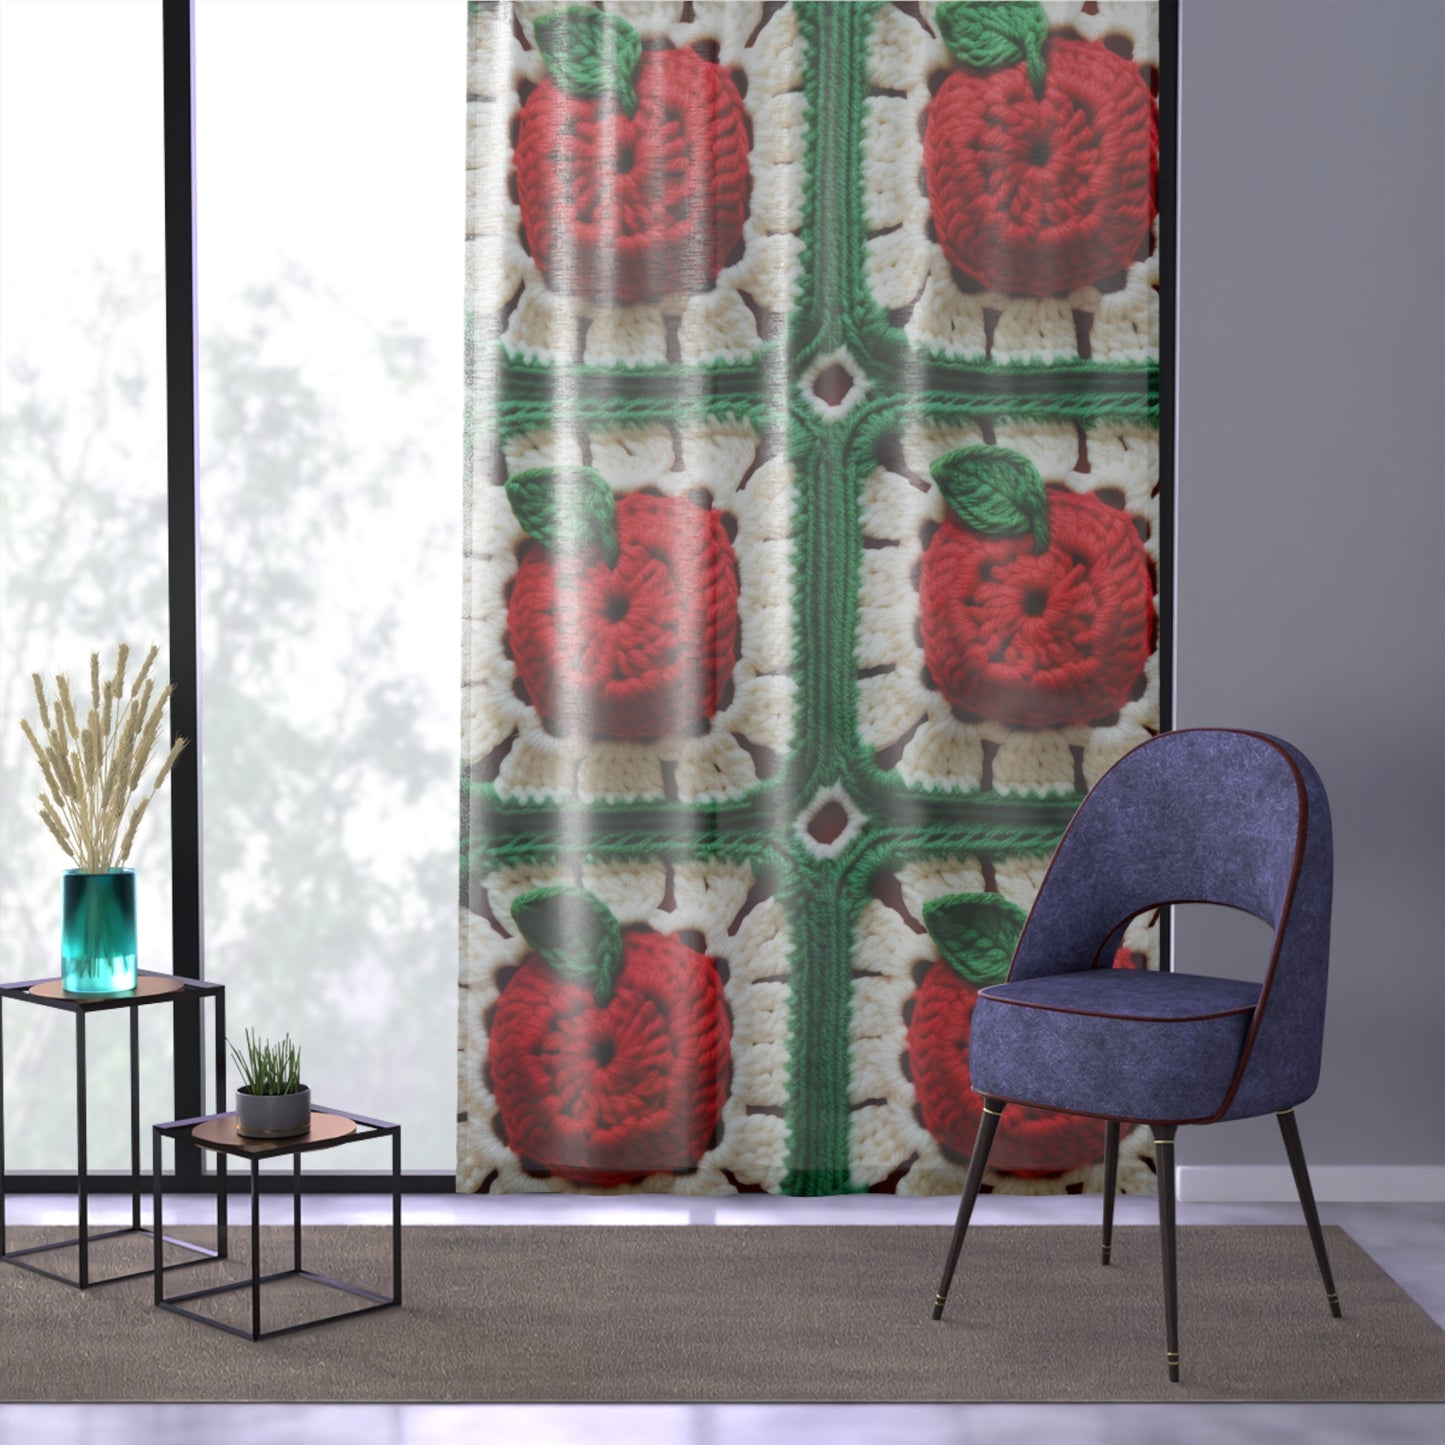 Apple Granny Square Crochet Pattern: Wild Fruit Tree, Delicious Red Design - Window Curtain